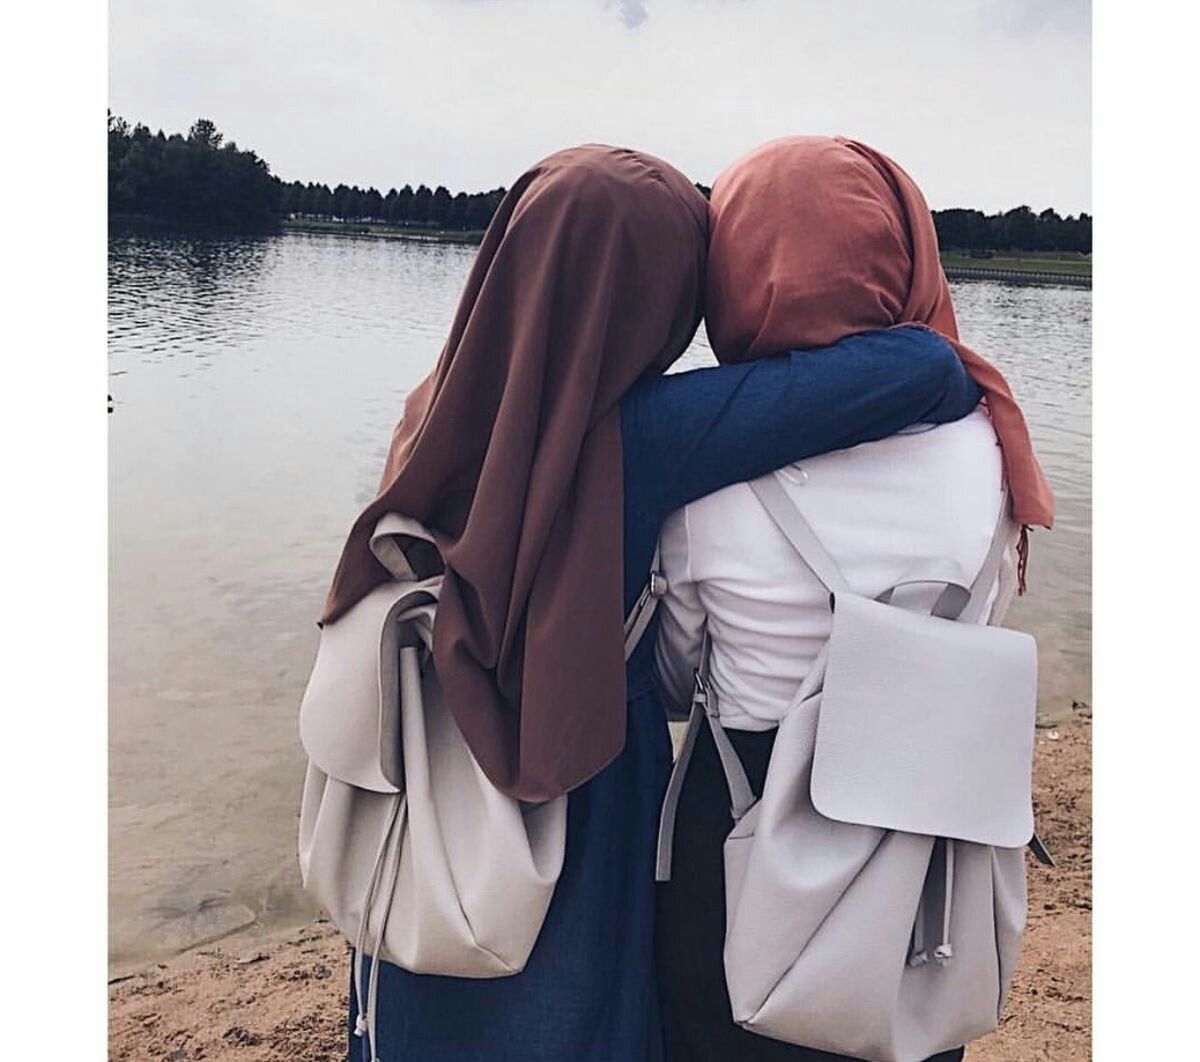 Hijab girls kissing and nude